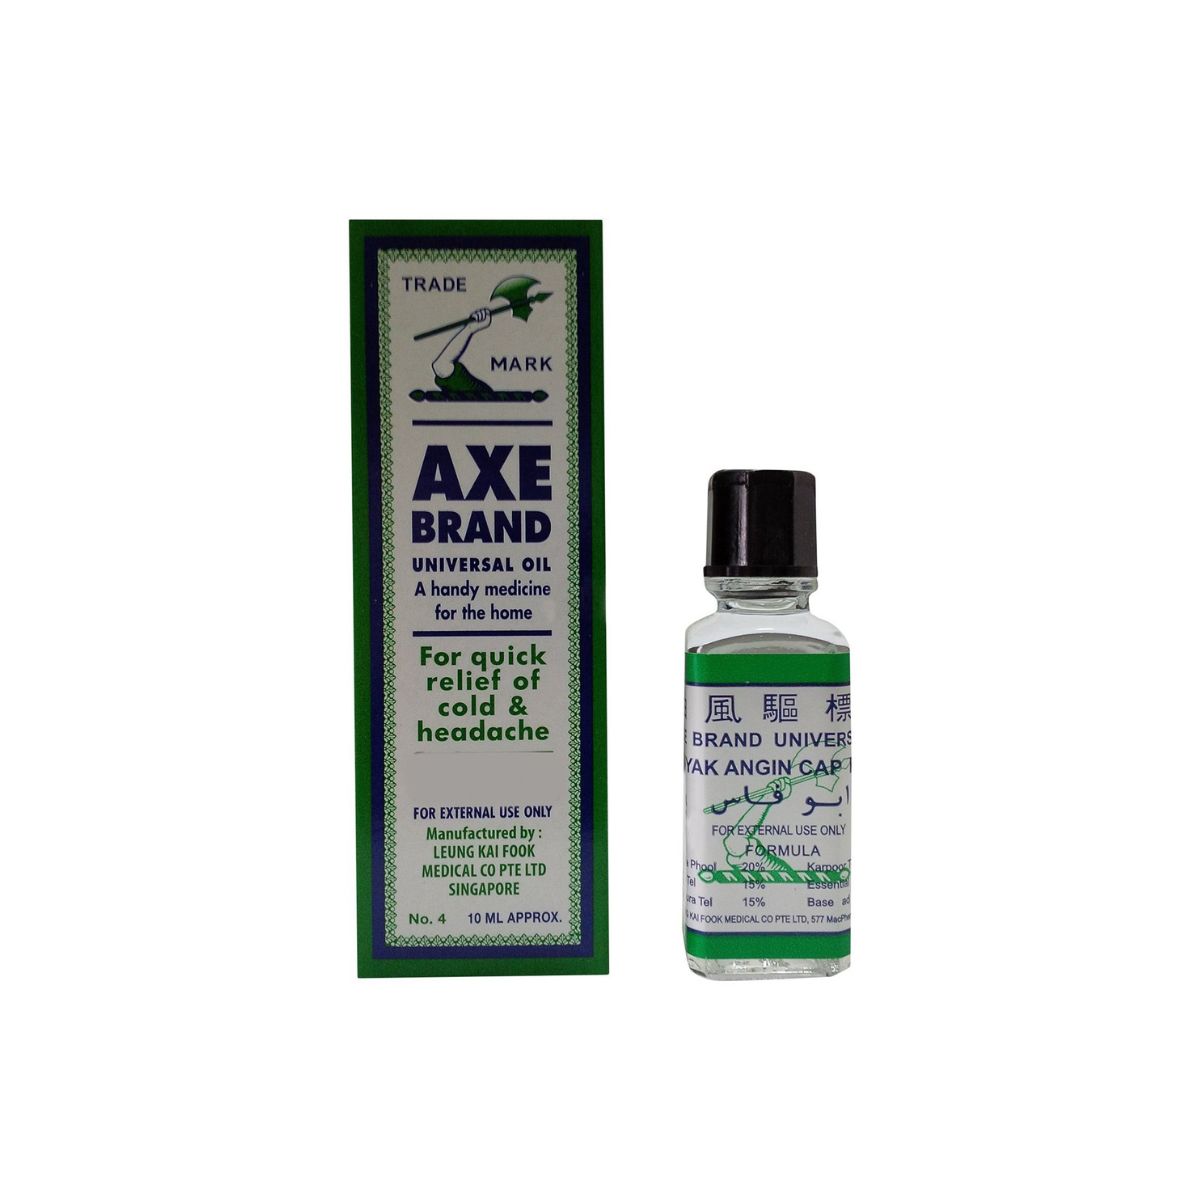 Axe Brand Universal Oil, 3ml 